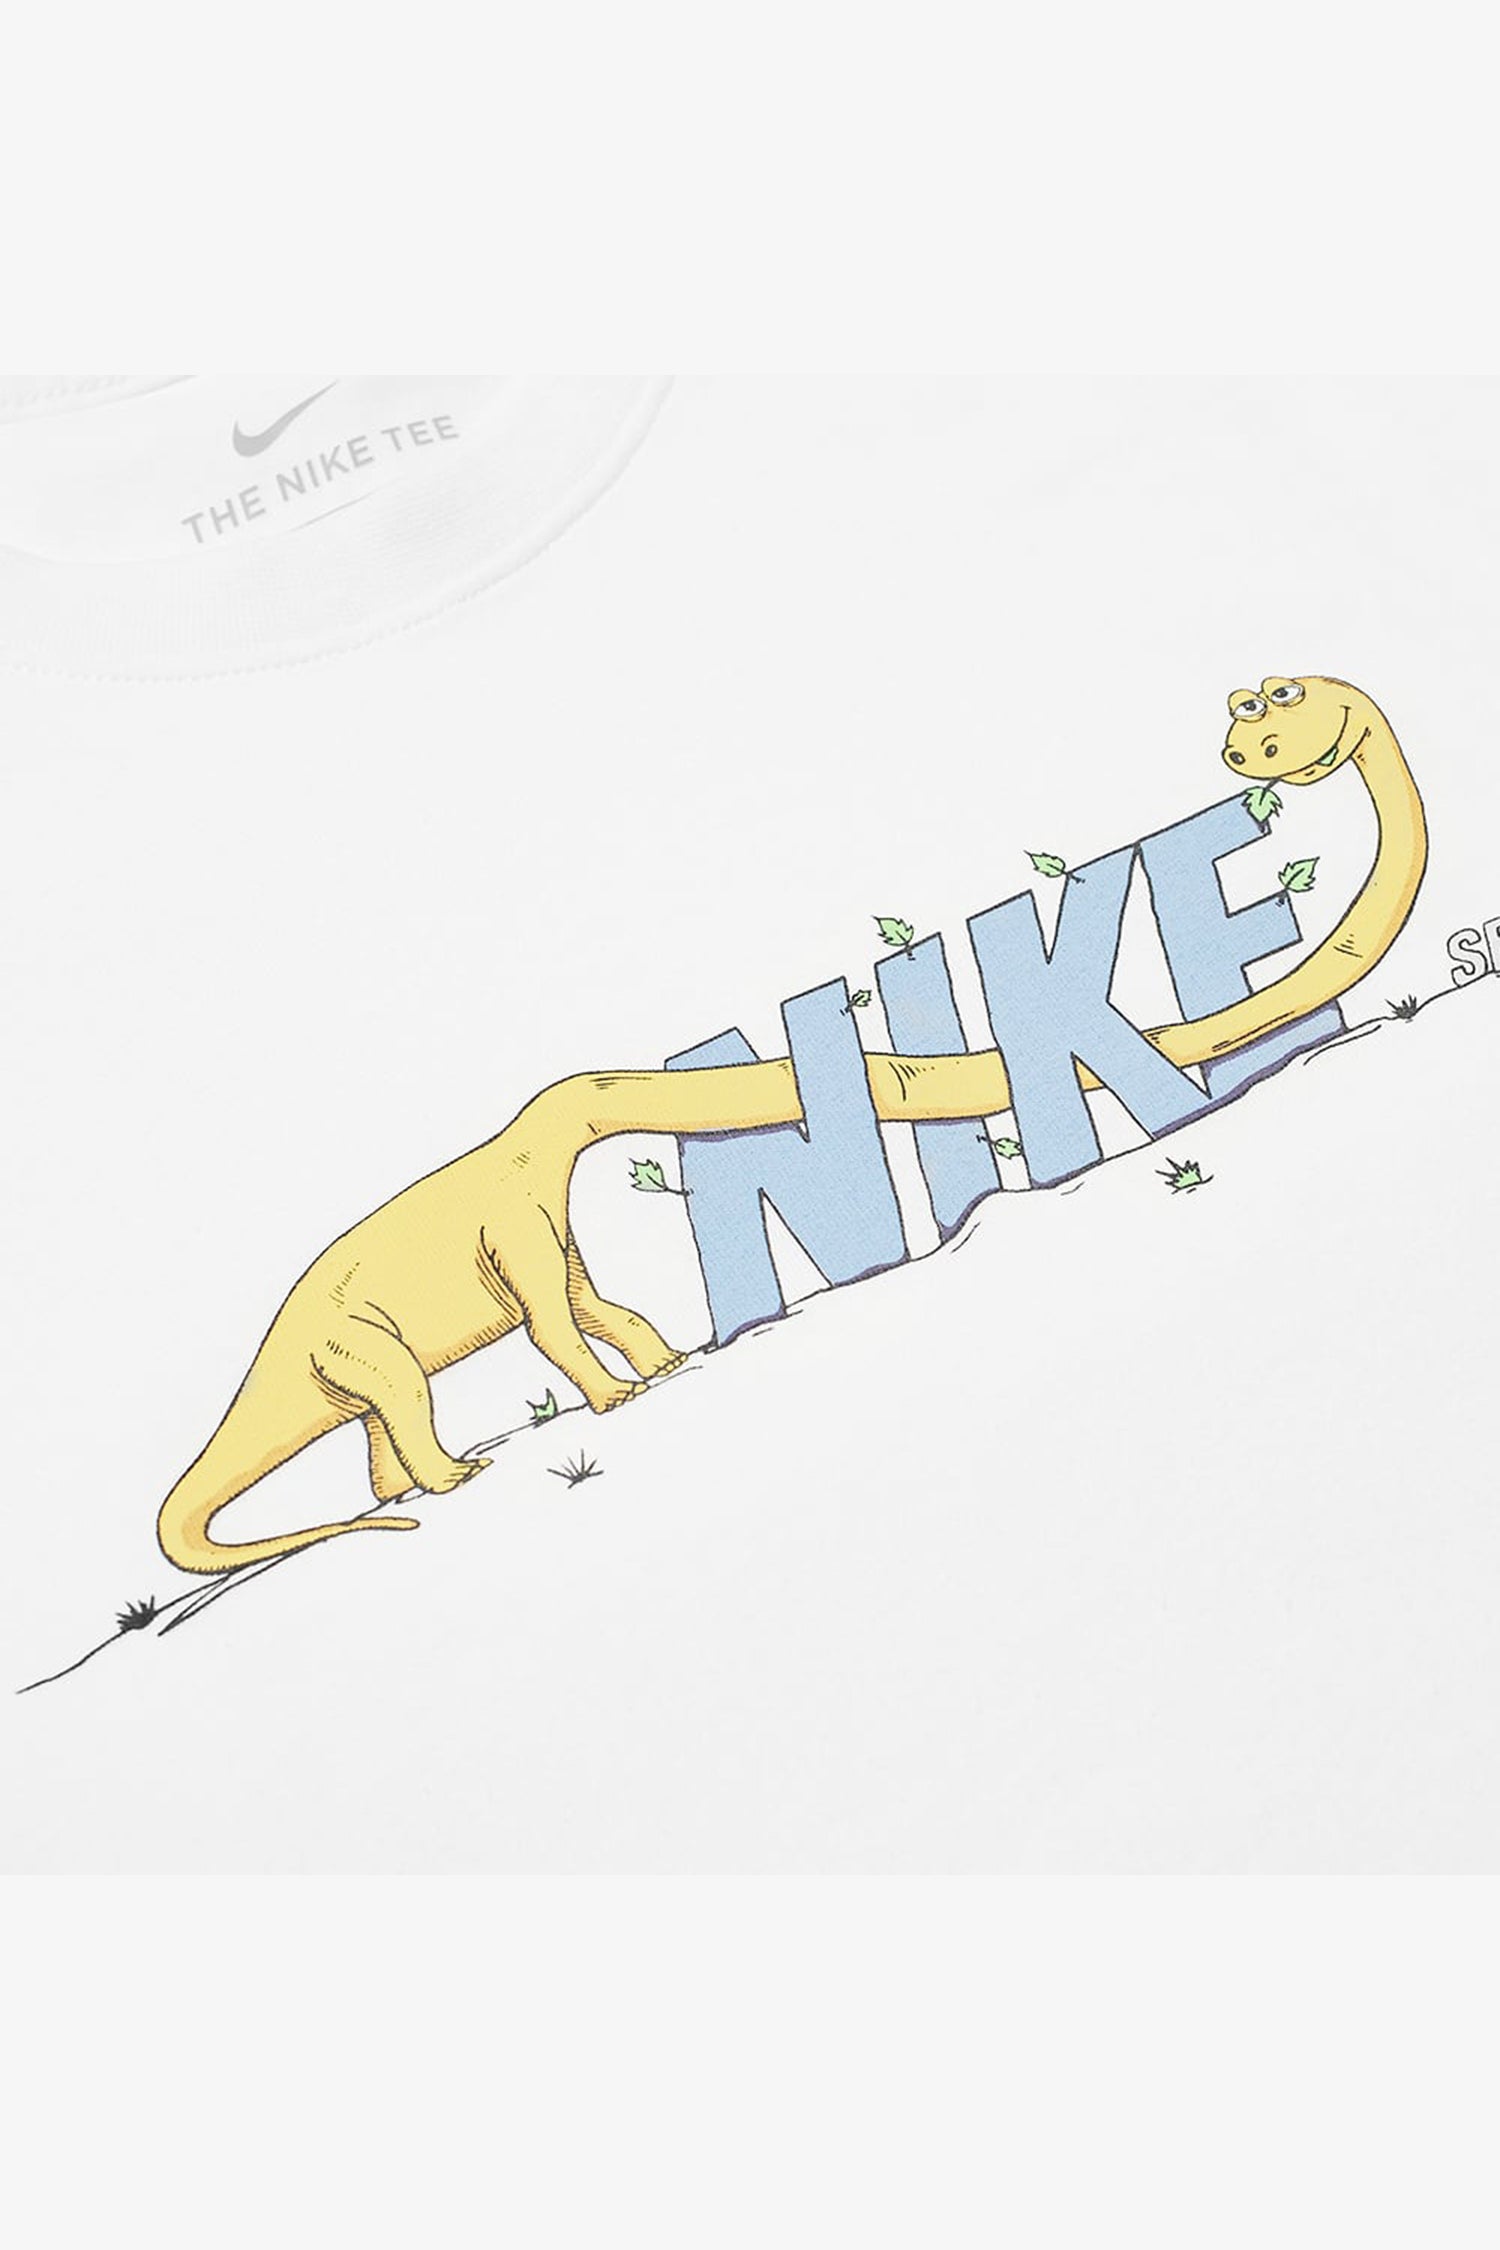 Selectshop FRAME - NIKE SB Dinonike Tee T-Shirt Dubai